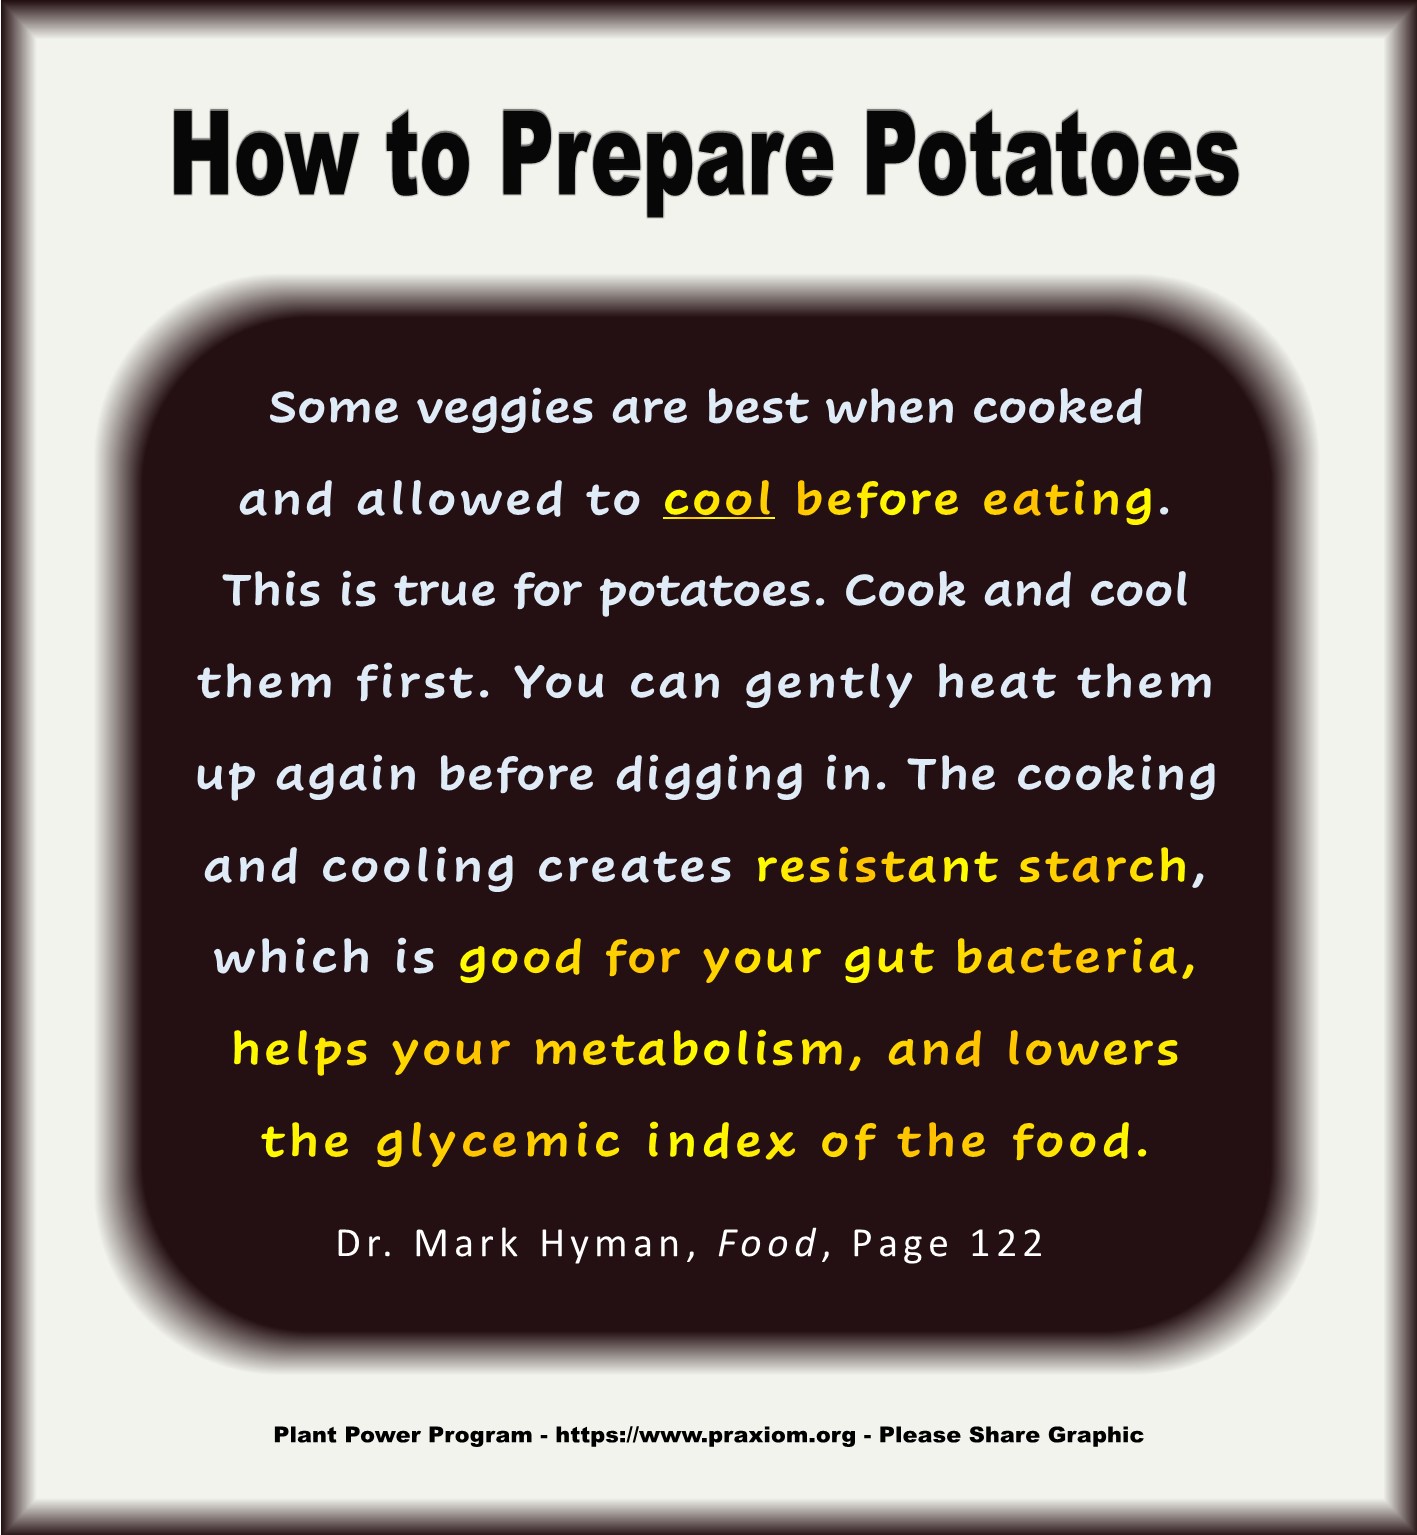 How to Prepare Potatoes - Dr. Mark Hyman